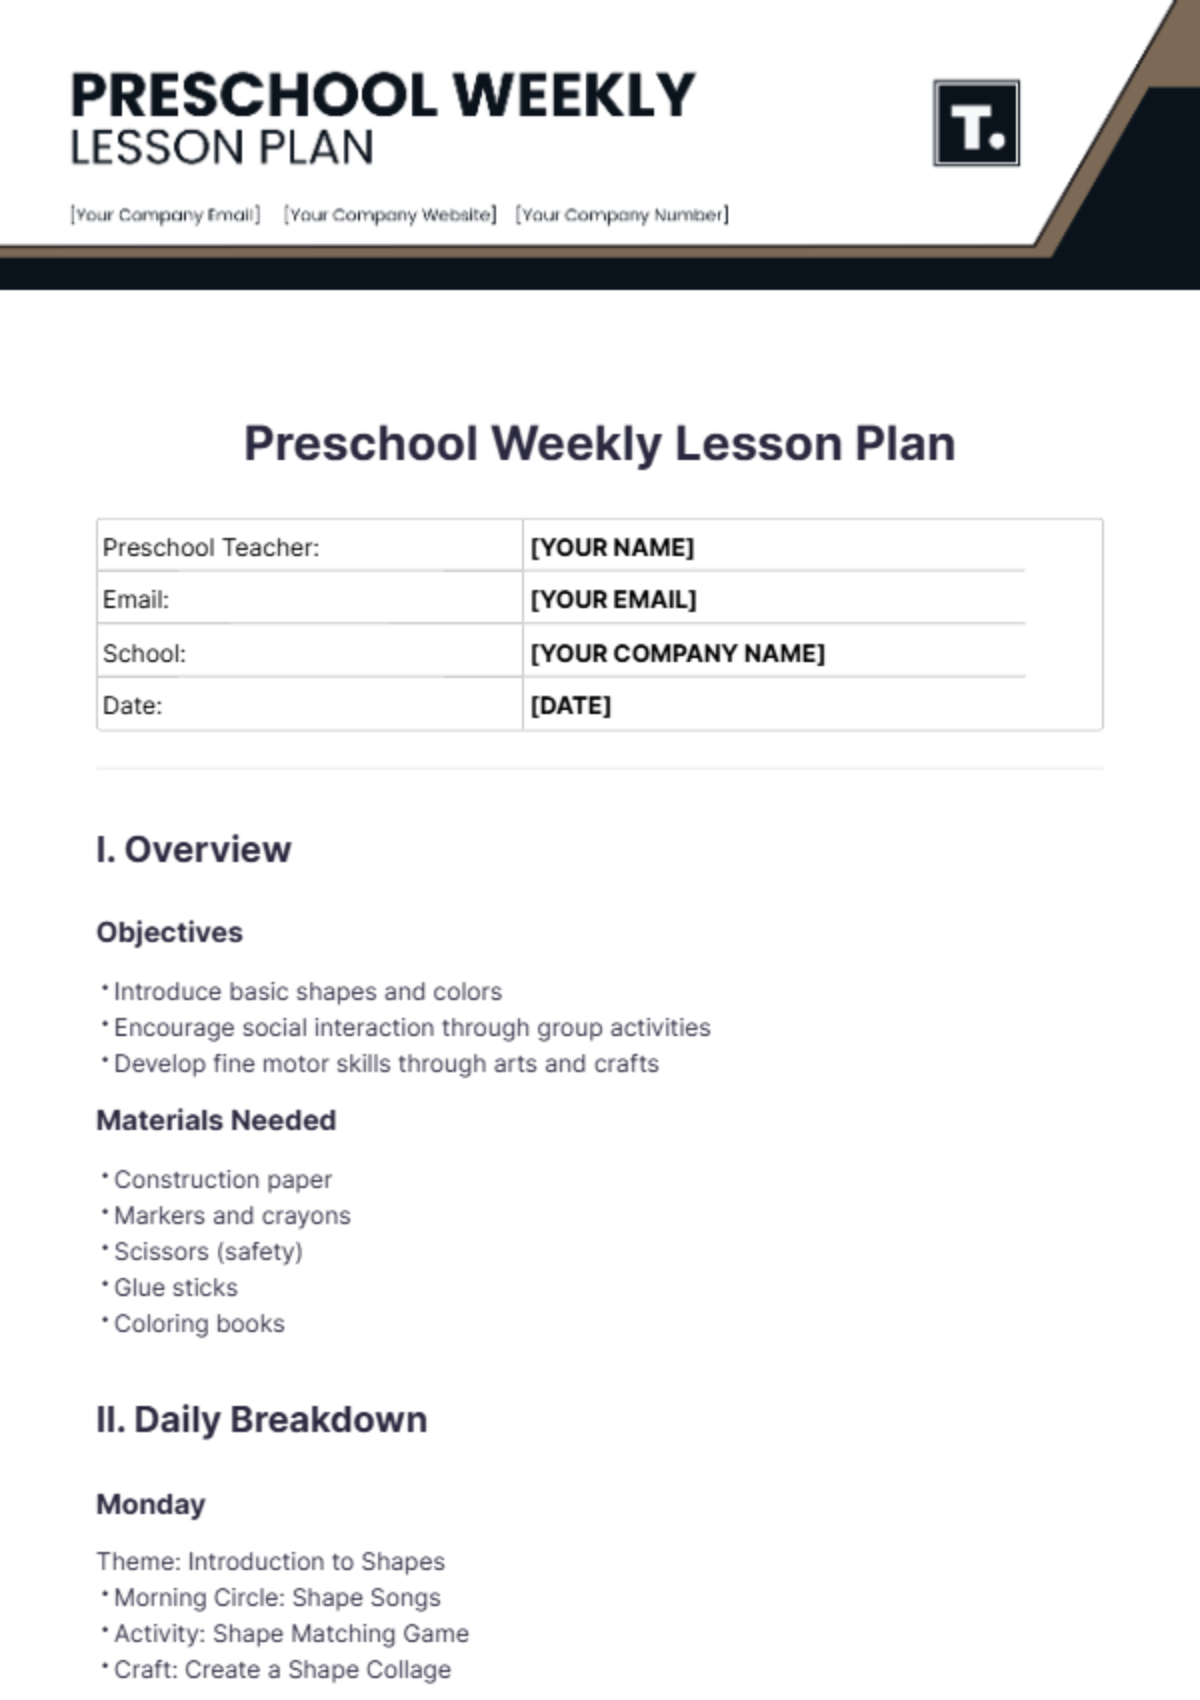 Free Preschool Weekly Lesson Plan Template